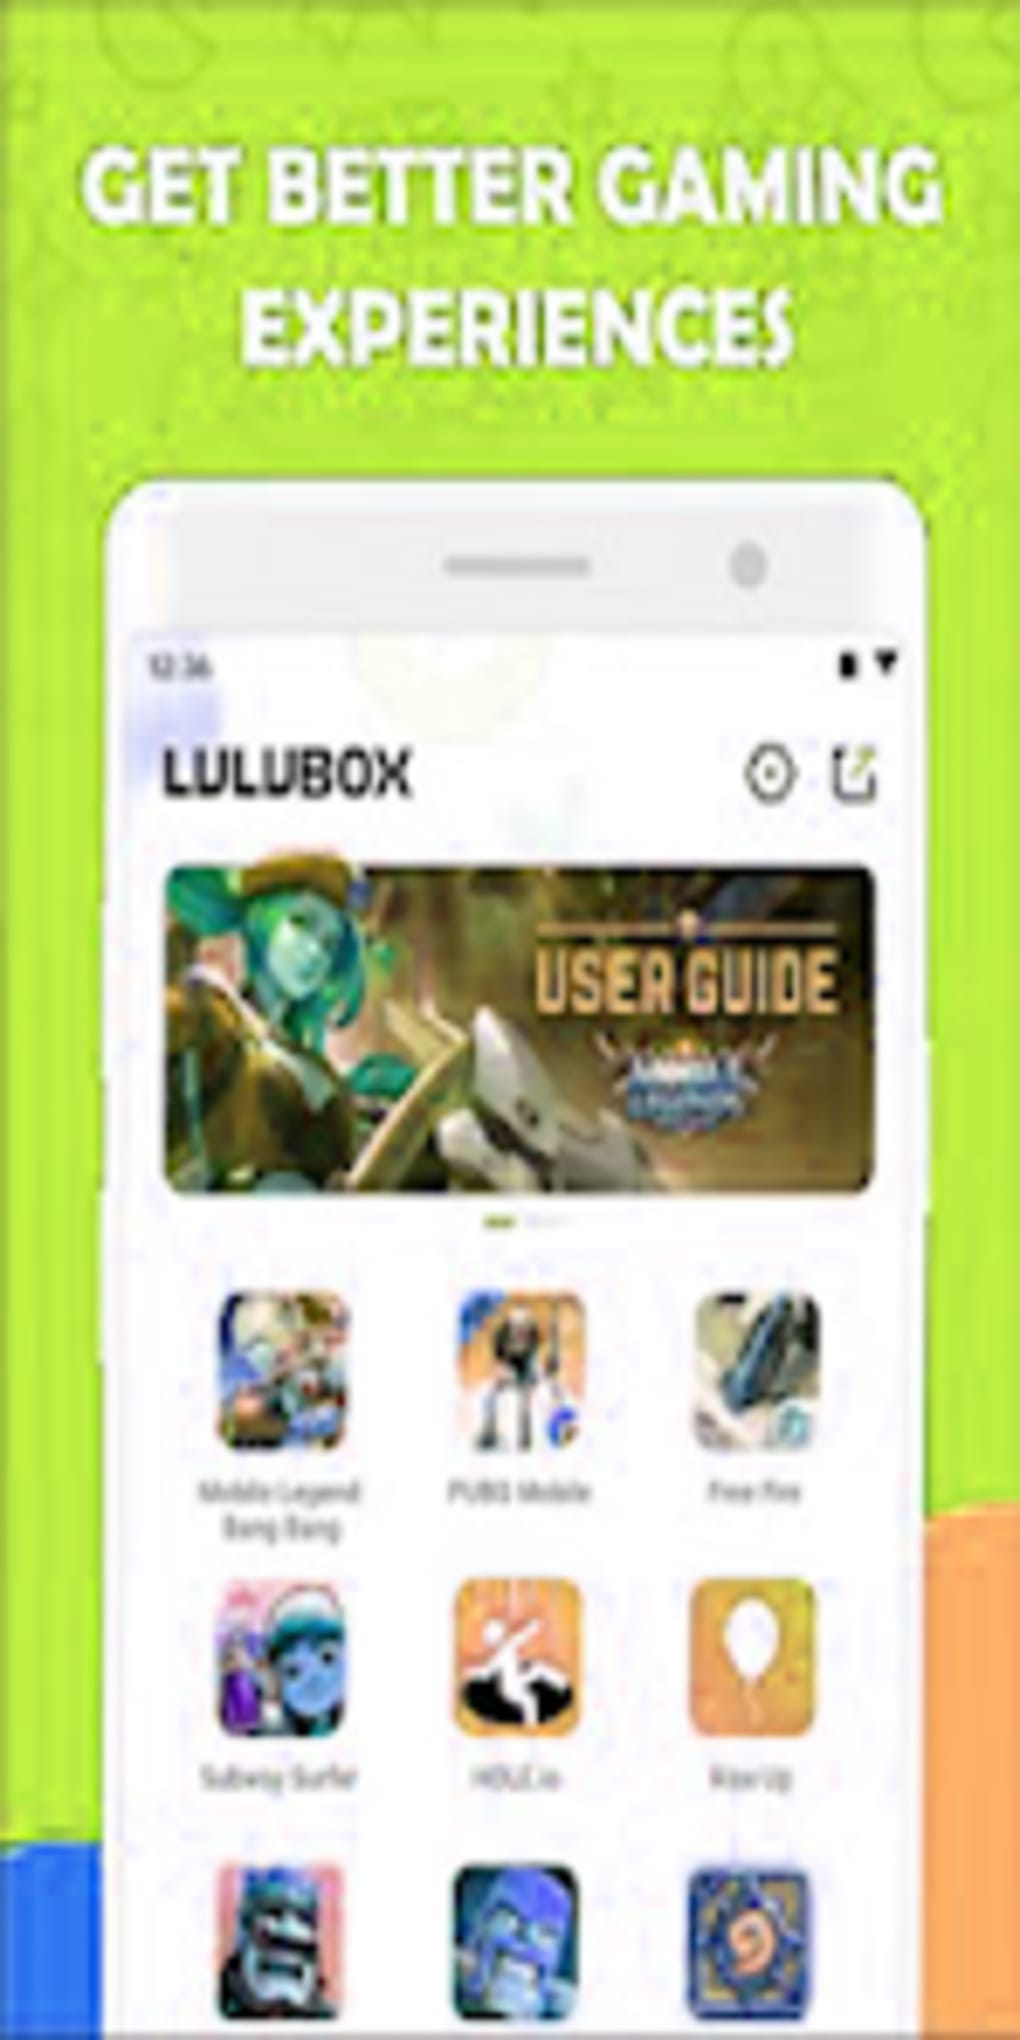 Roblox Studio Game Guide, Mobile, App, Download, APK, Tips